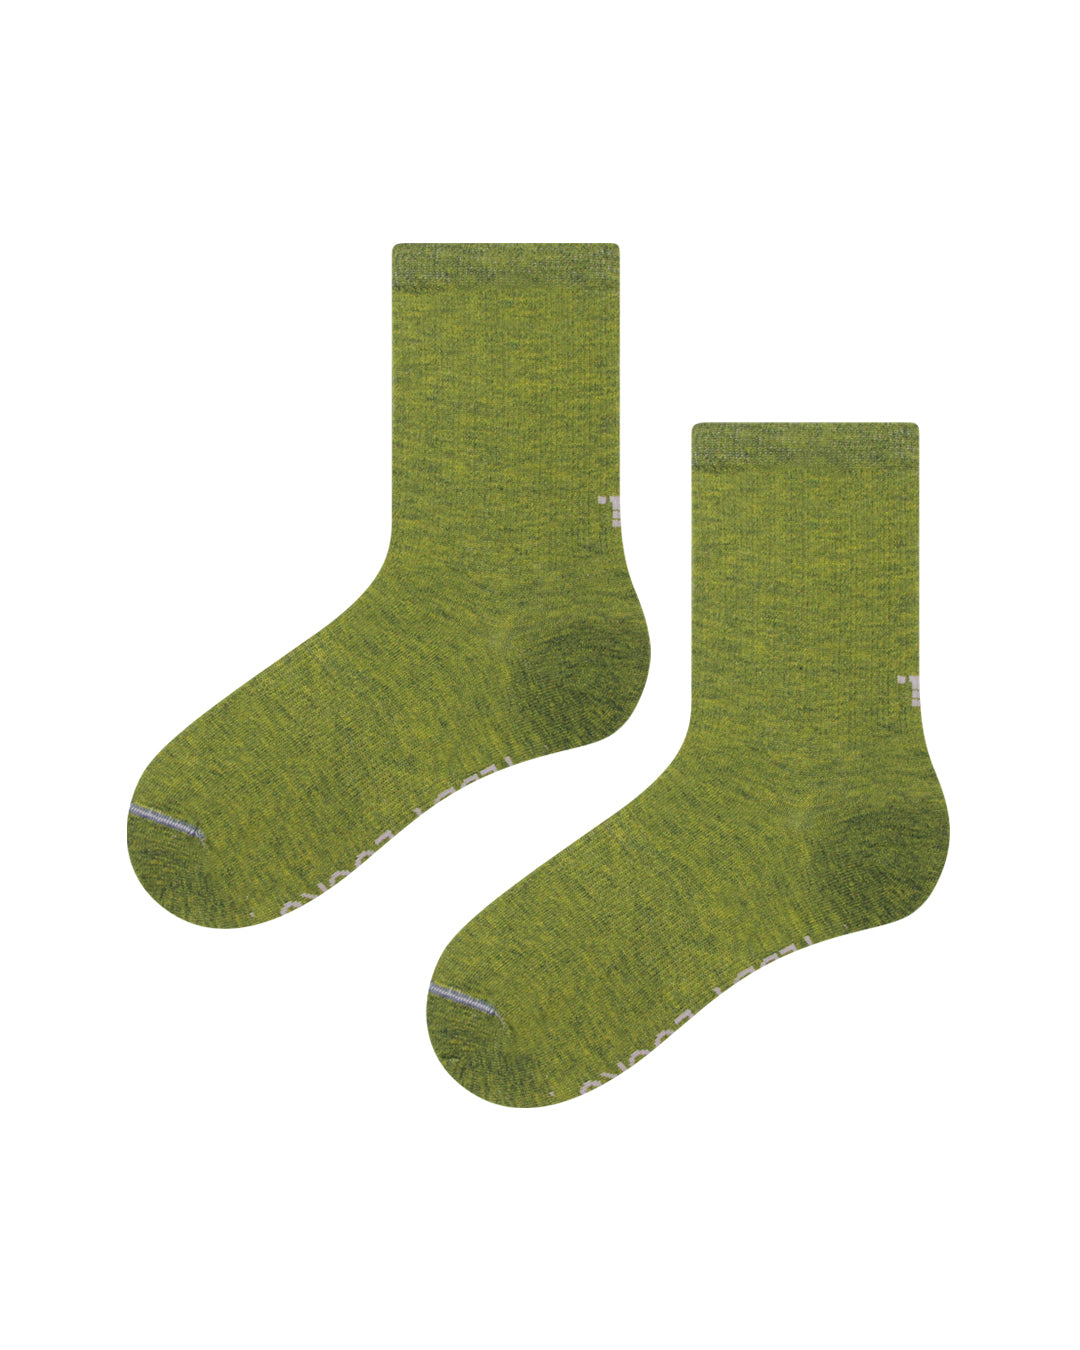 Vegan friendly moss green welly boot socks